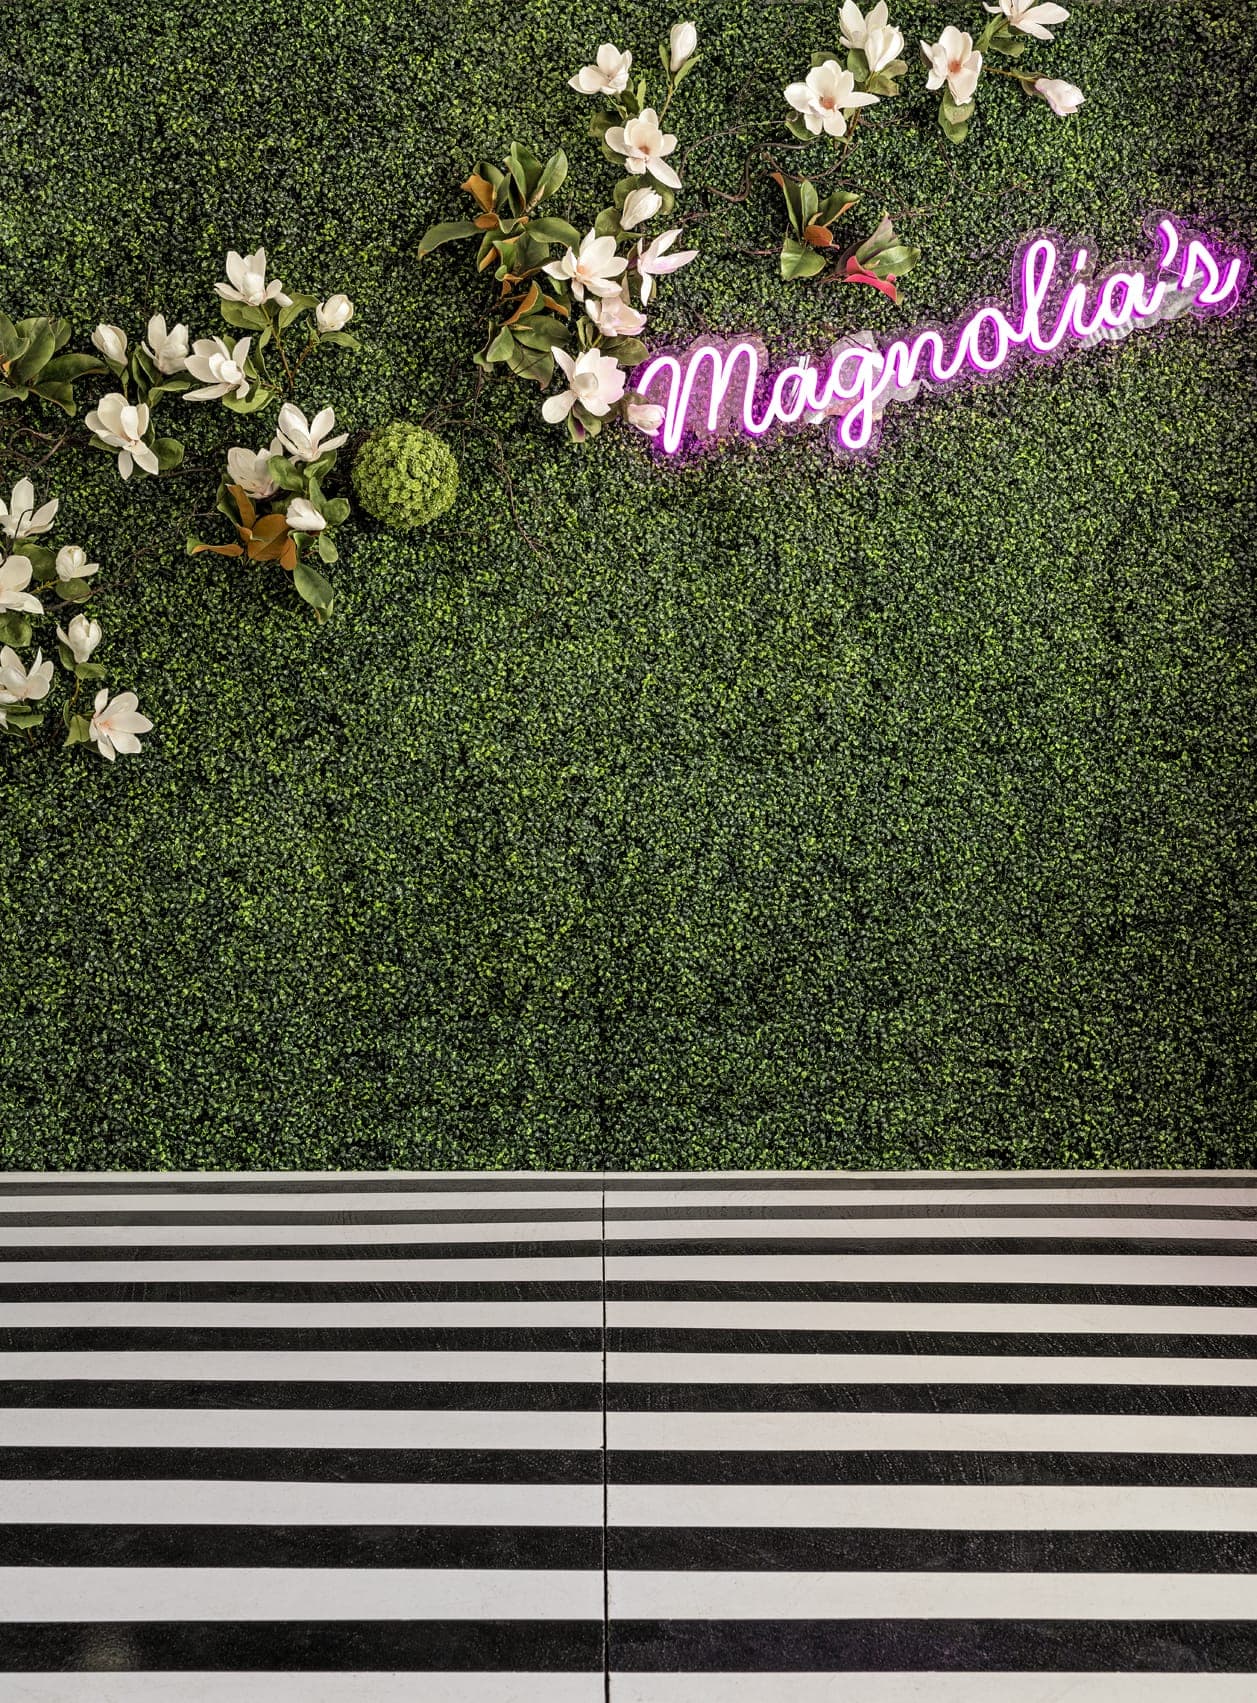 Magnolias Nion Light Wall Mount Fake Hedge Black White Floor